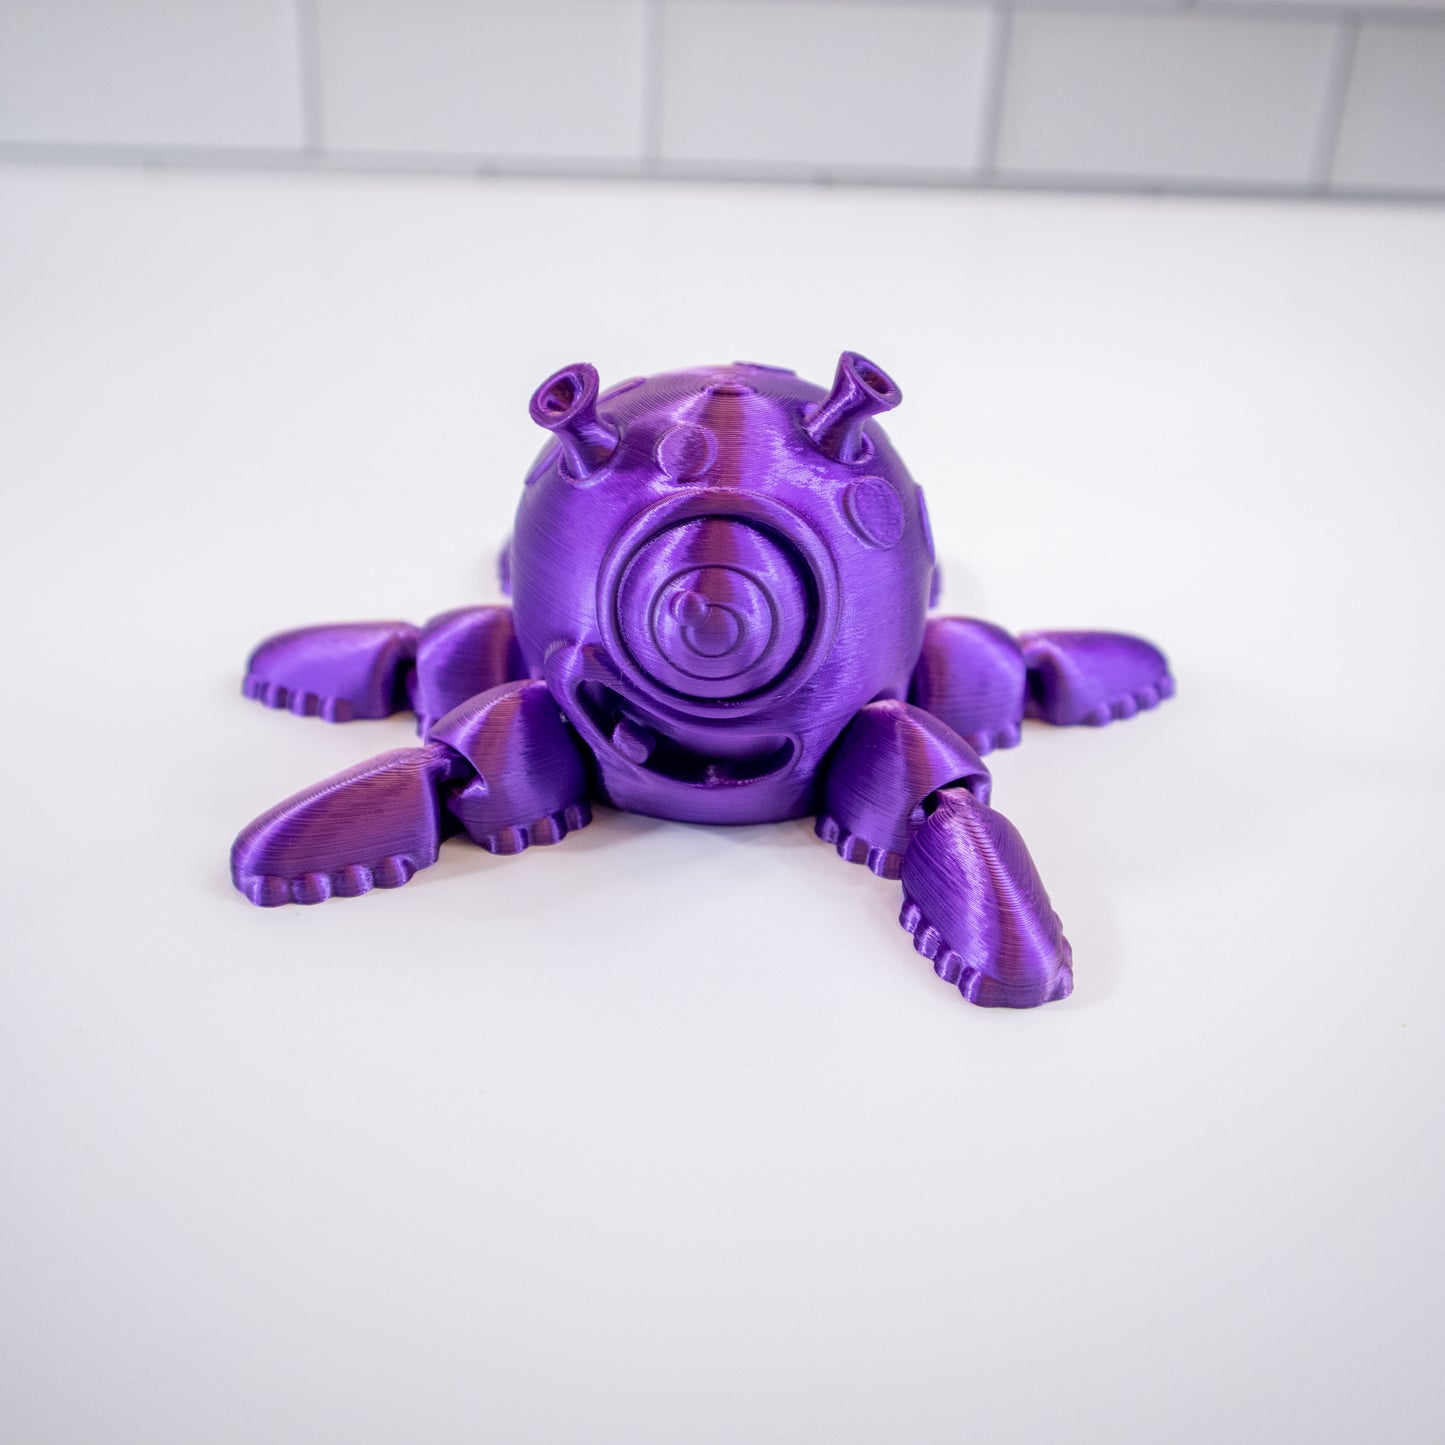 Galactic spinners: Alien Octopus